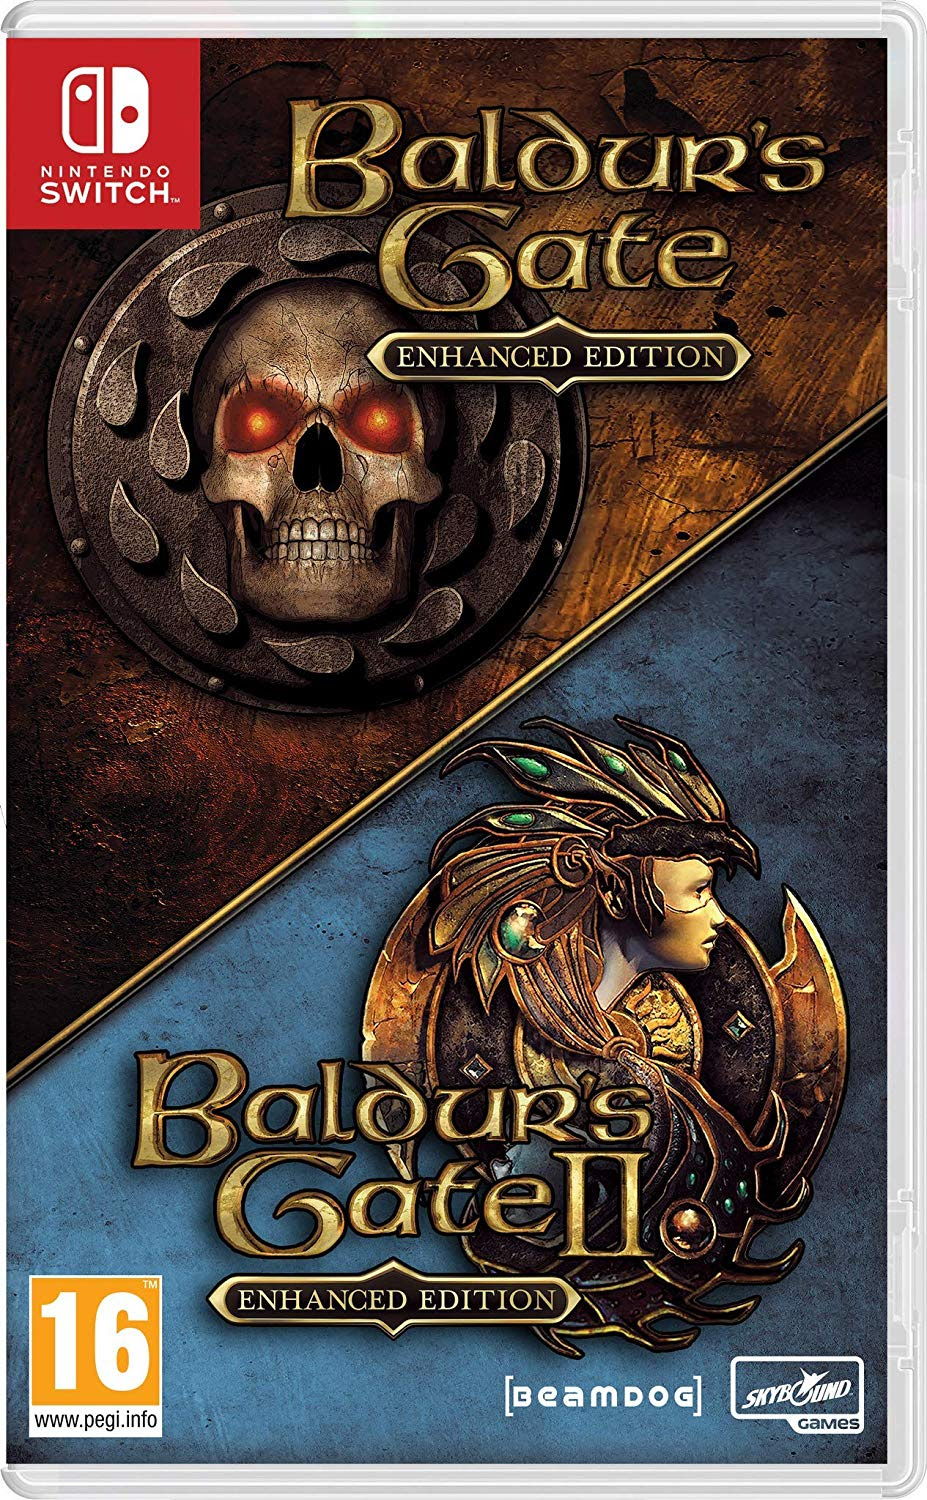 Baldurs Gate 1+2 Enhanced Edition